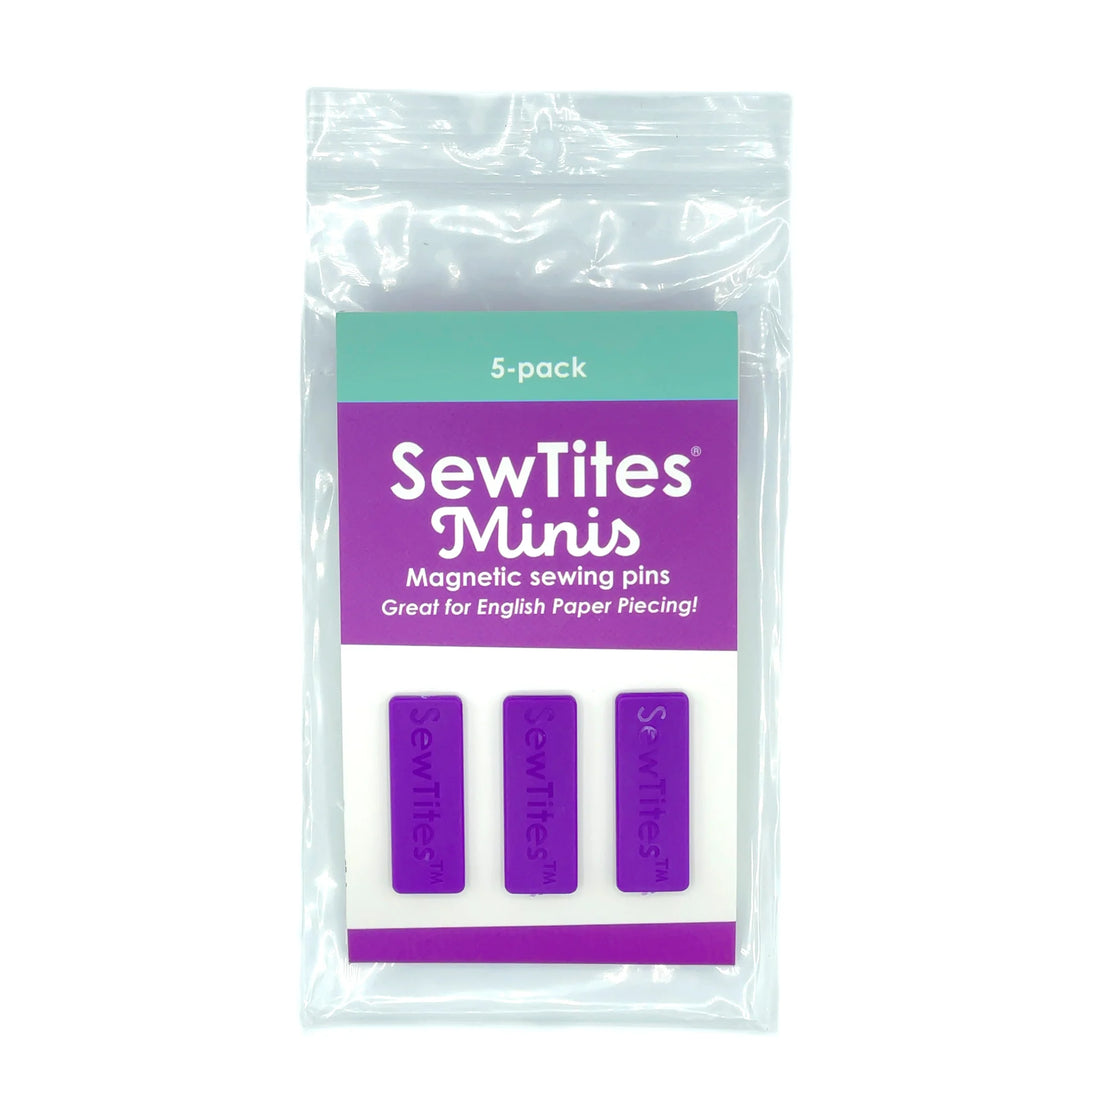 SewTites Minis - 5 Pack